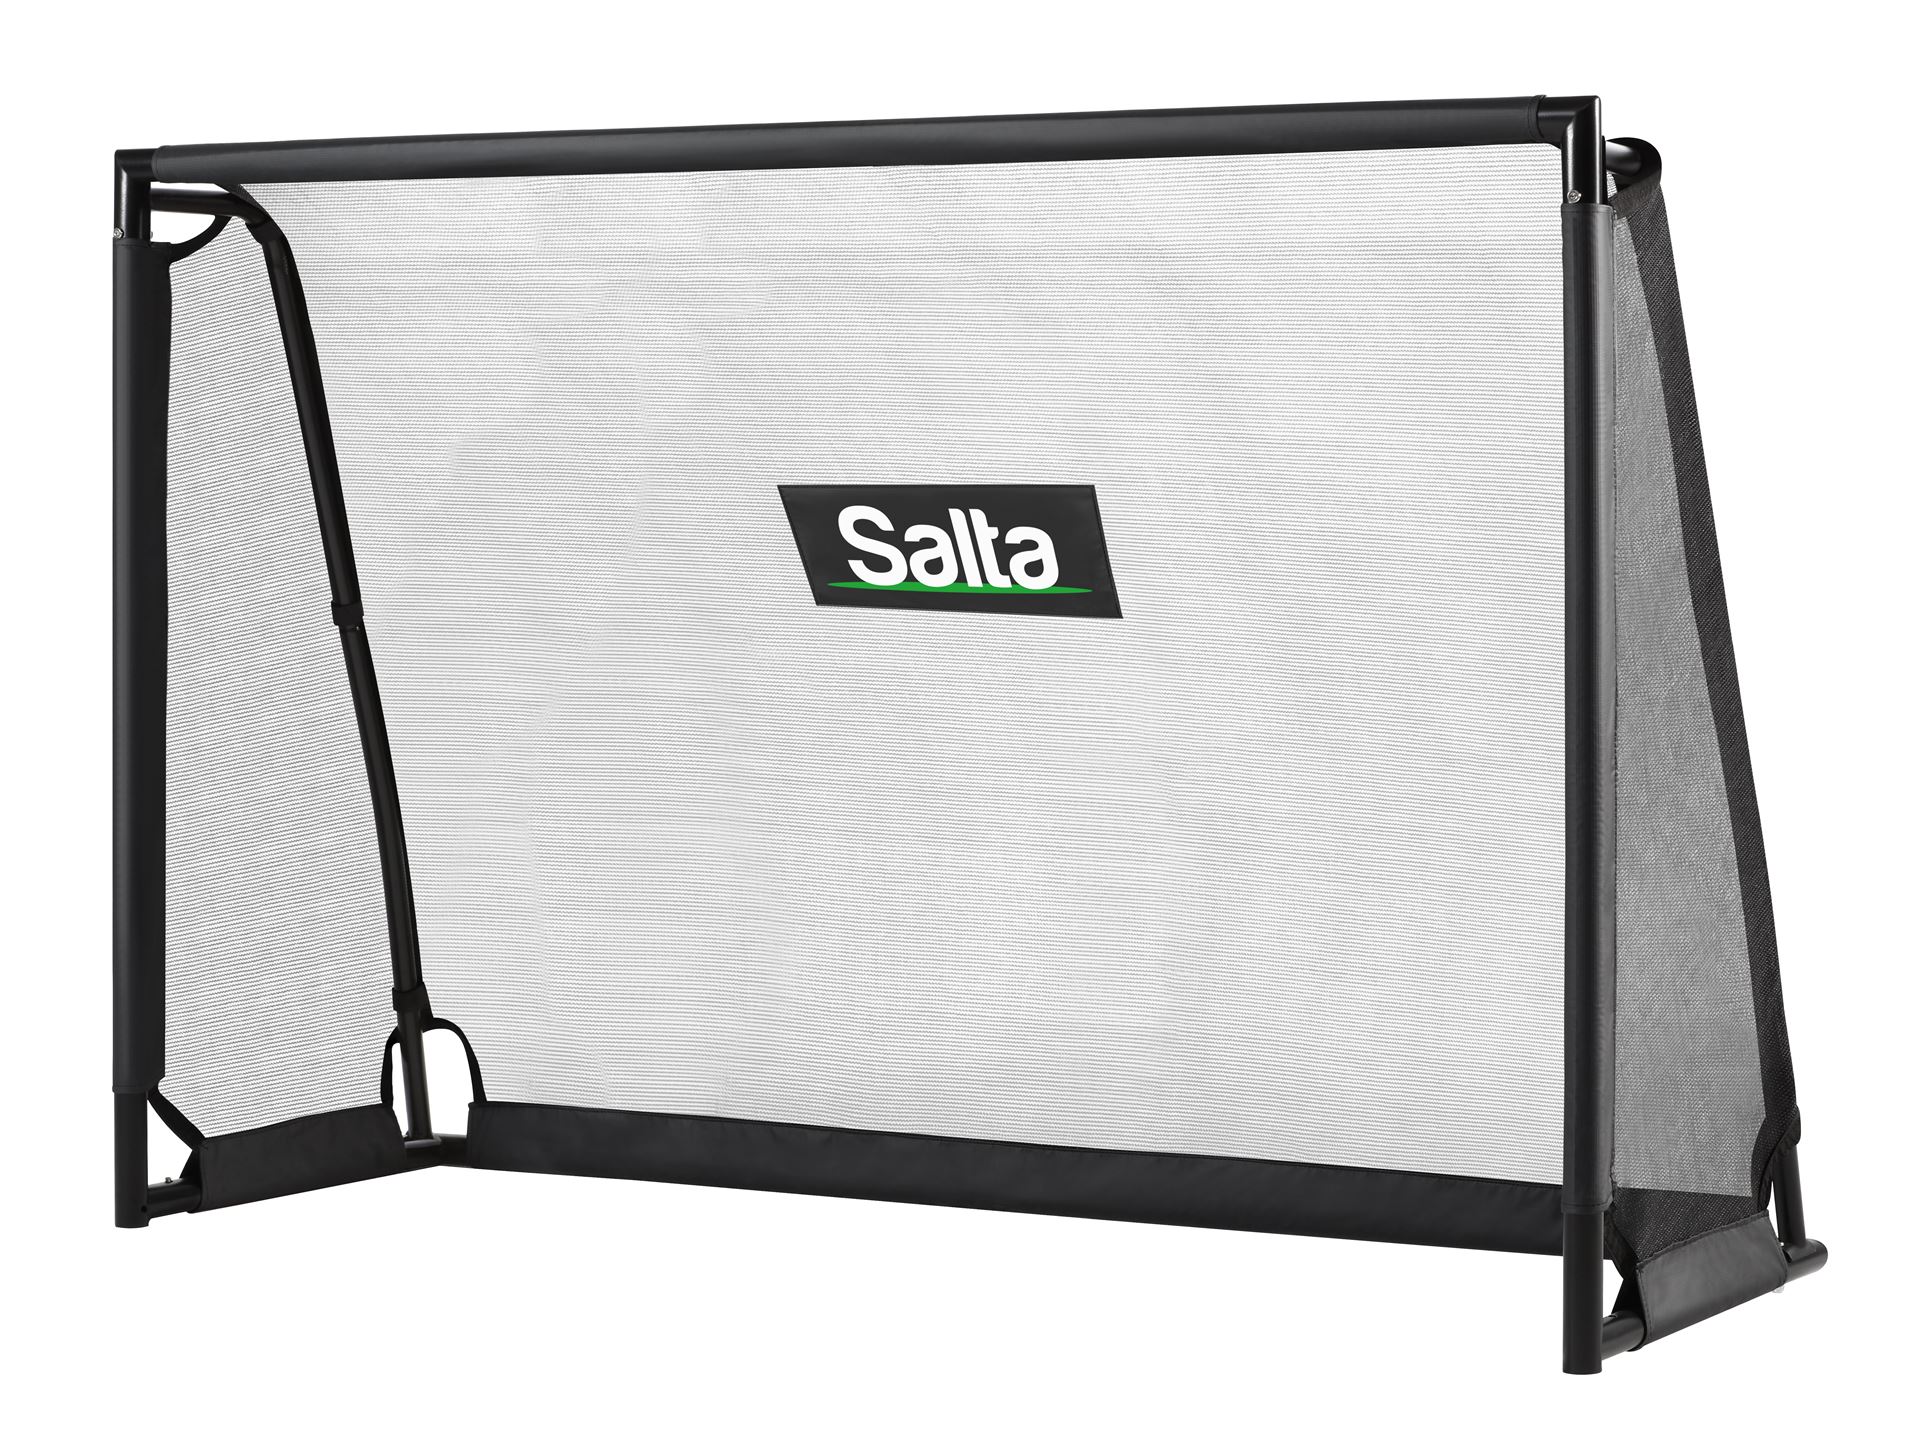 Salta-Legend-180-x-120-x-60-cm-Soccer-goal-with-training-screen